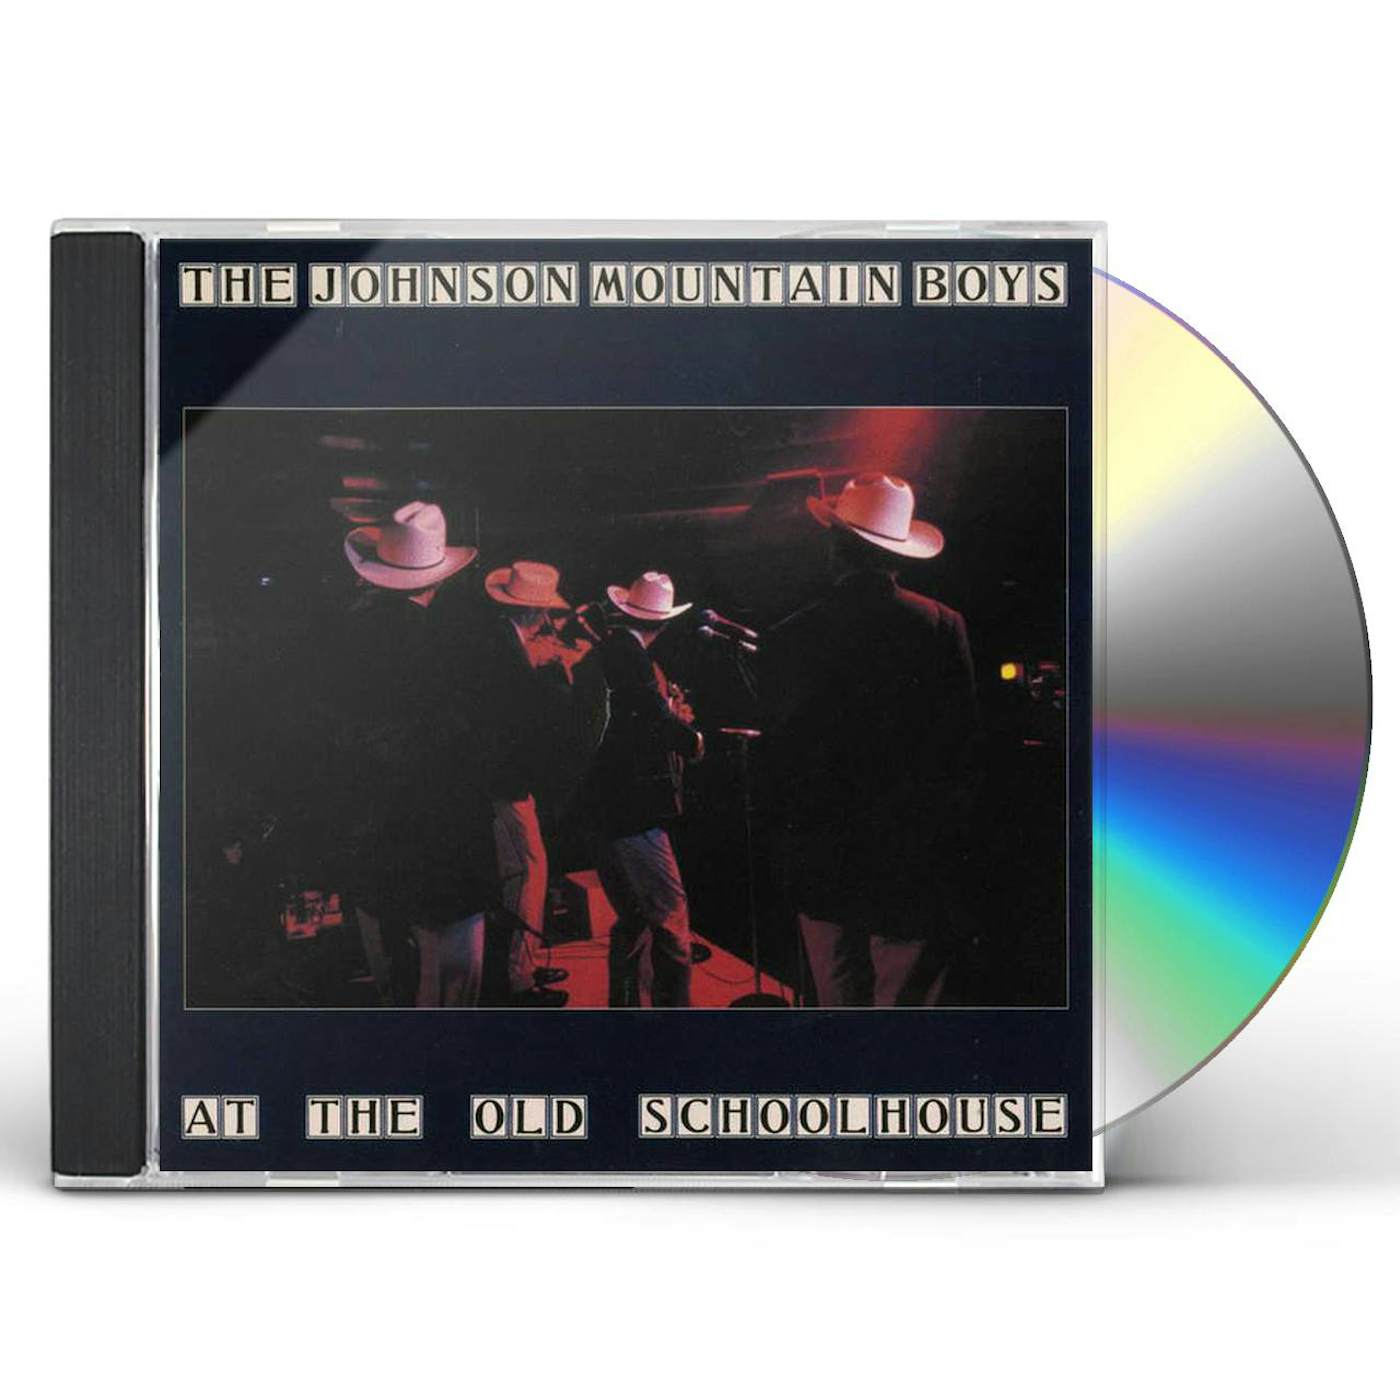 The Johnson Mountain Boys AT THE OLD SCHOOLHOUSE CD